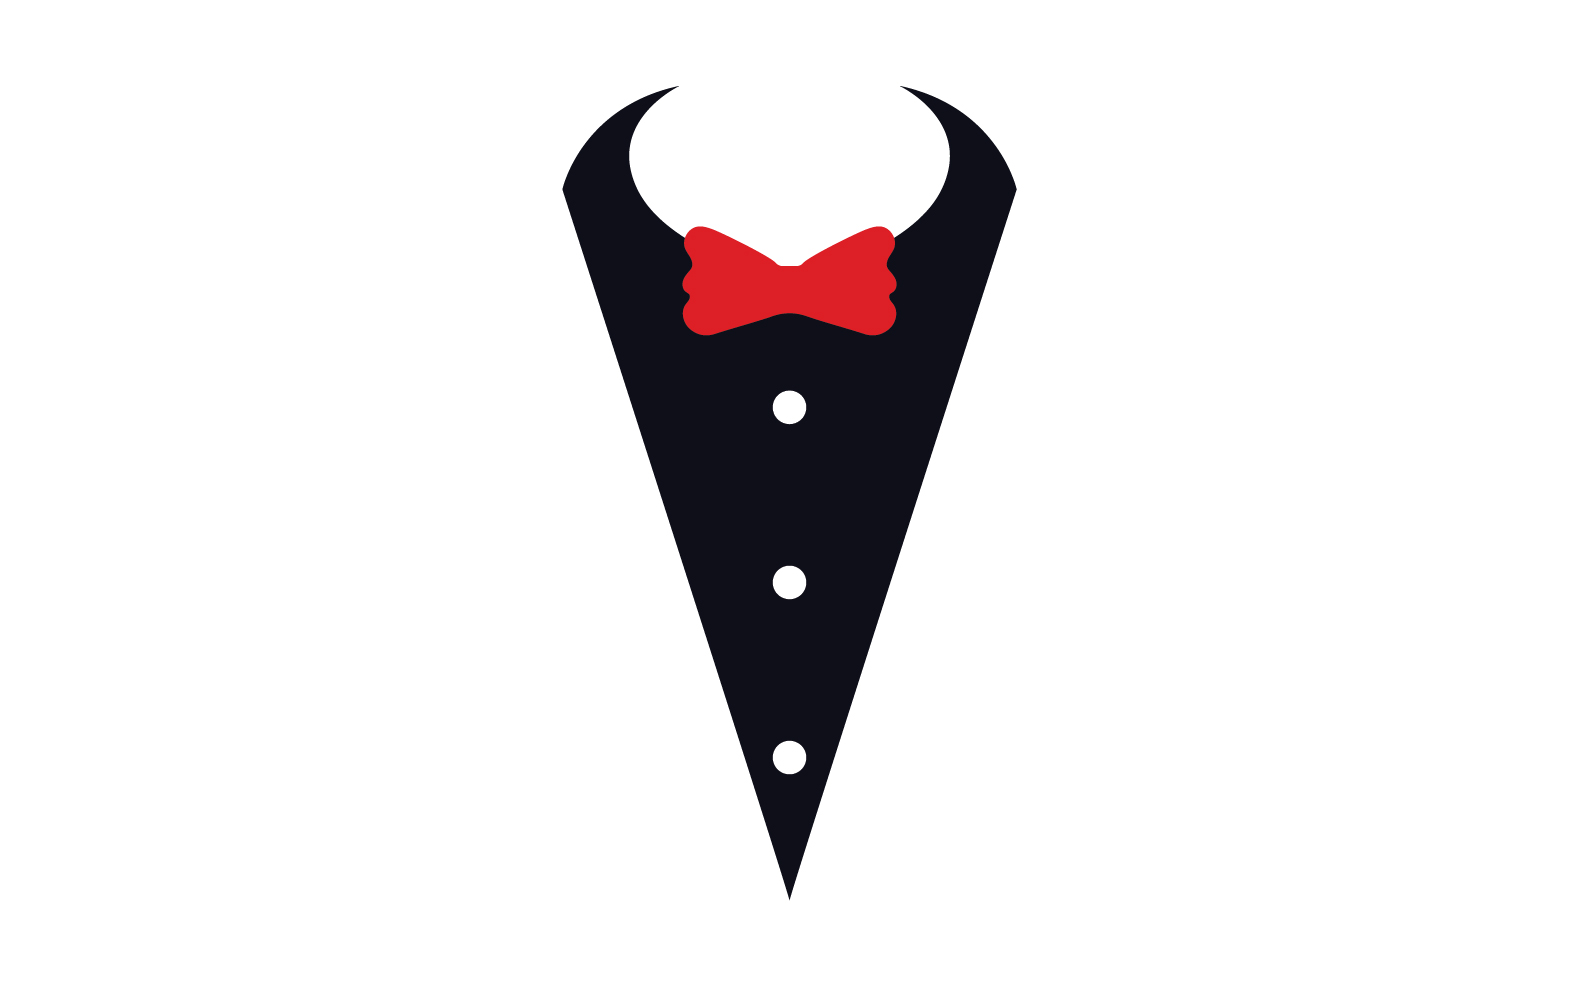 Maid suit logo and symbol vector design v4